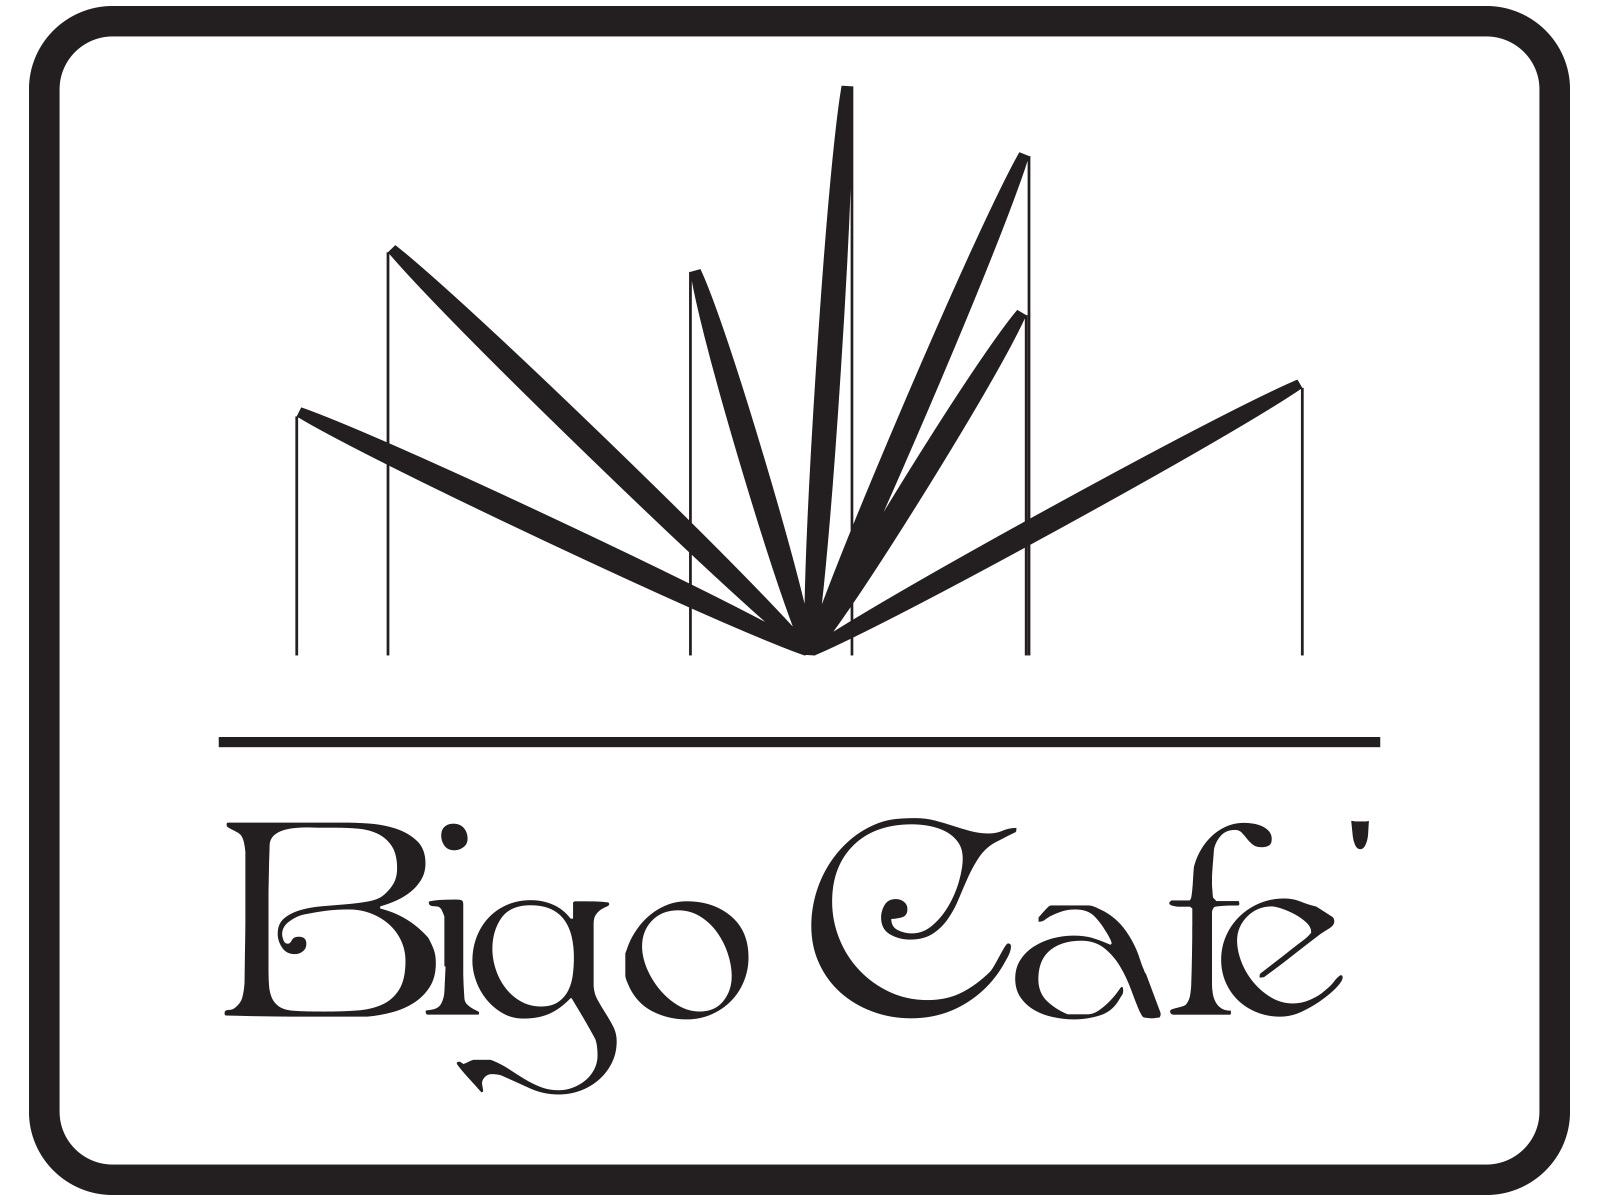 Bigo Cafè - Lounge aperitivo e tavola calda